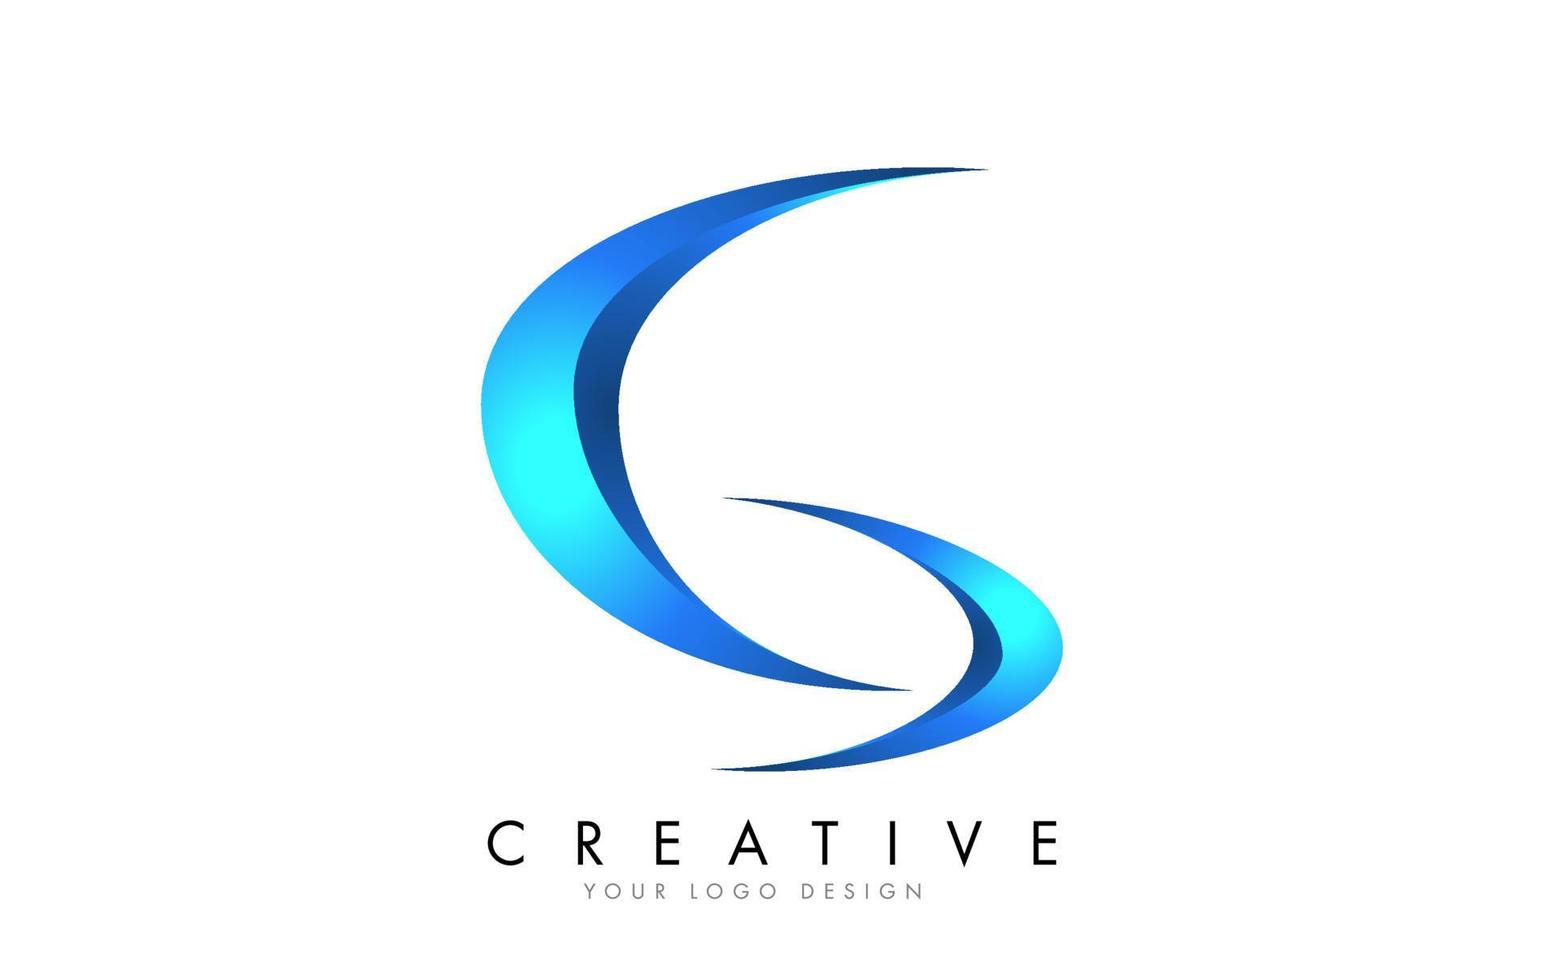 Logotipo de letra g creativo con swashes azules brillantes 3d. vector de icono de swoosh azul.